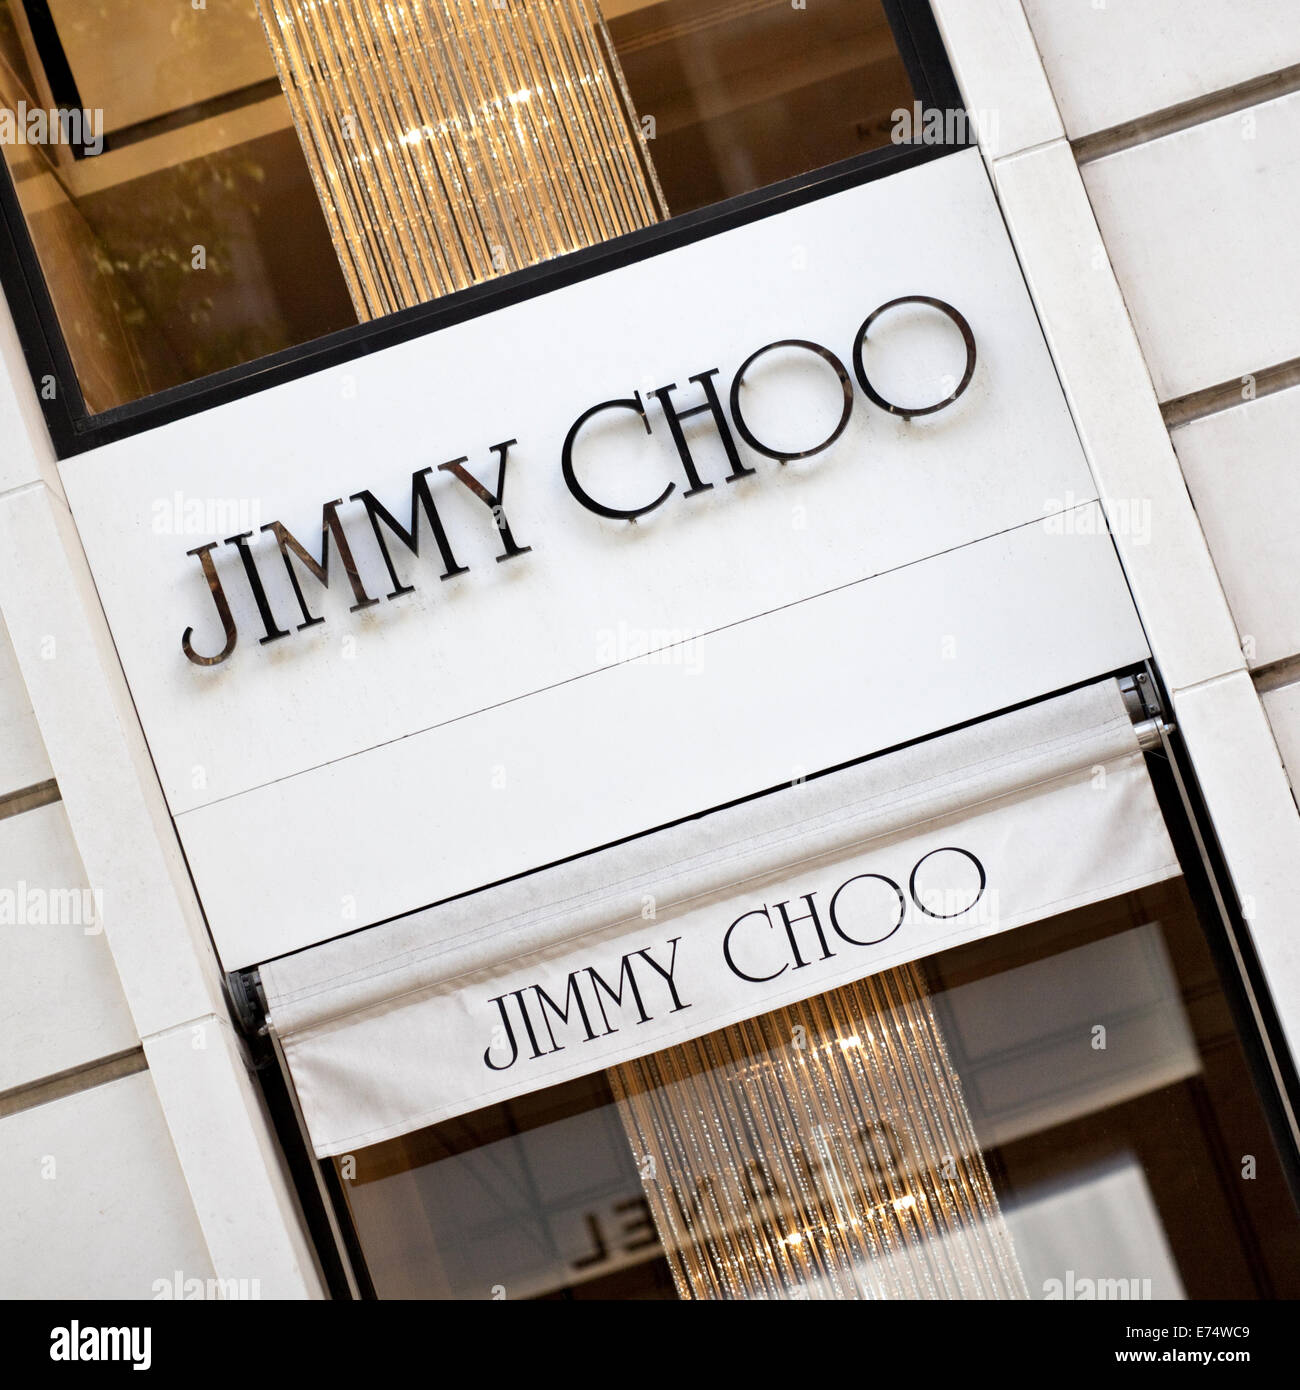 Jimmy Choo high-street negozio ad Anversa, in Belgio Foto stock - Alamy